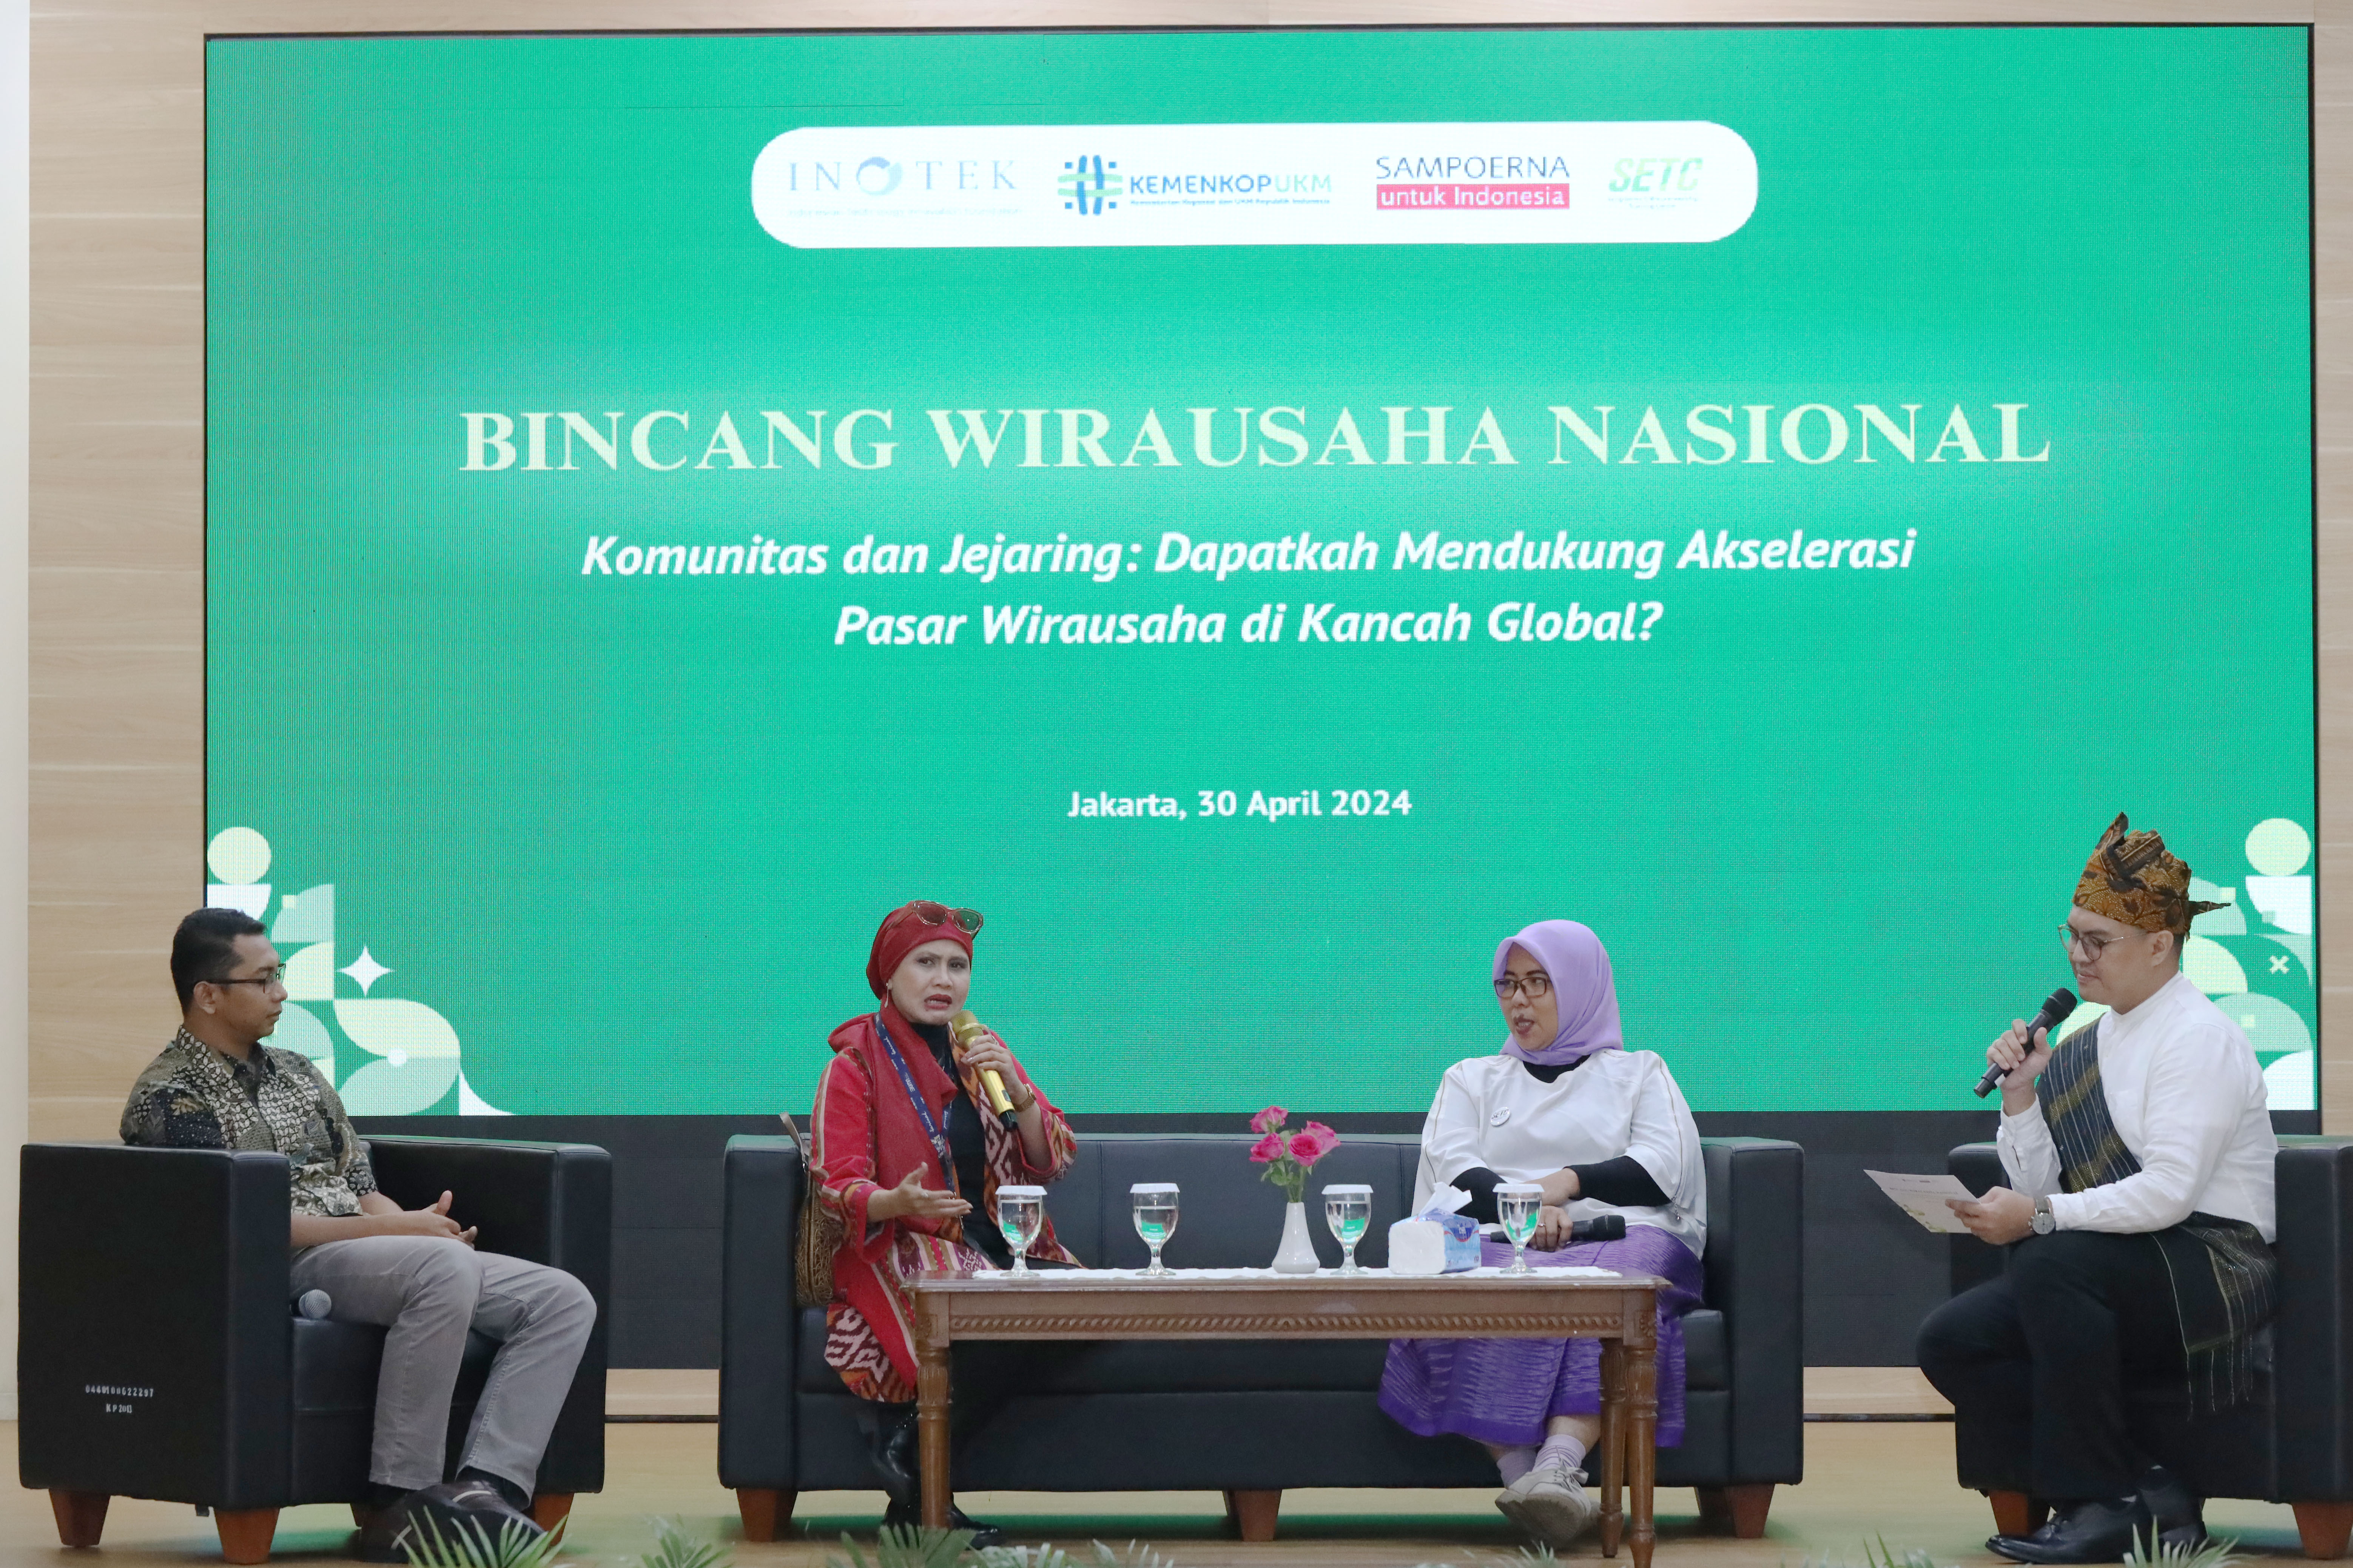 Dukung Akselerasi Pasar UMKM, Sampoerna Gelar Bincang Wirausaha Nasional di Jakarta